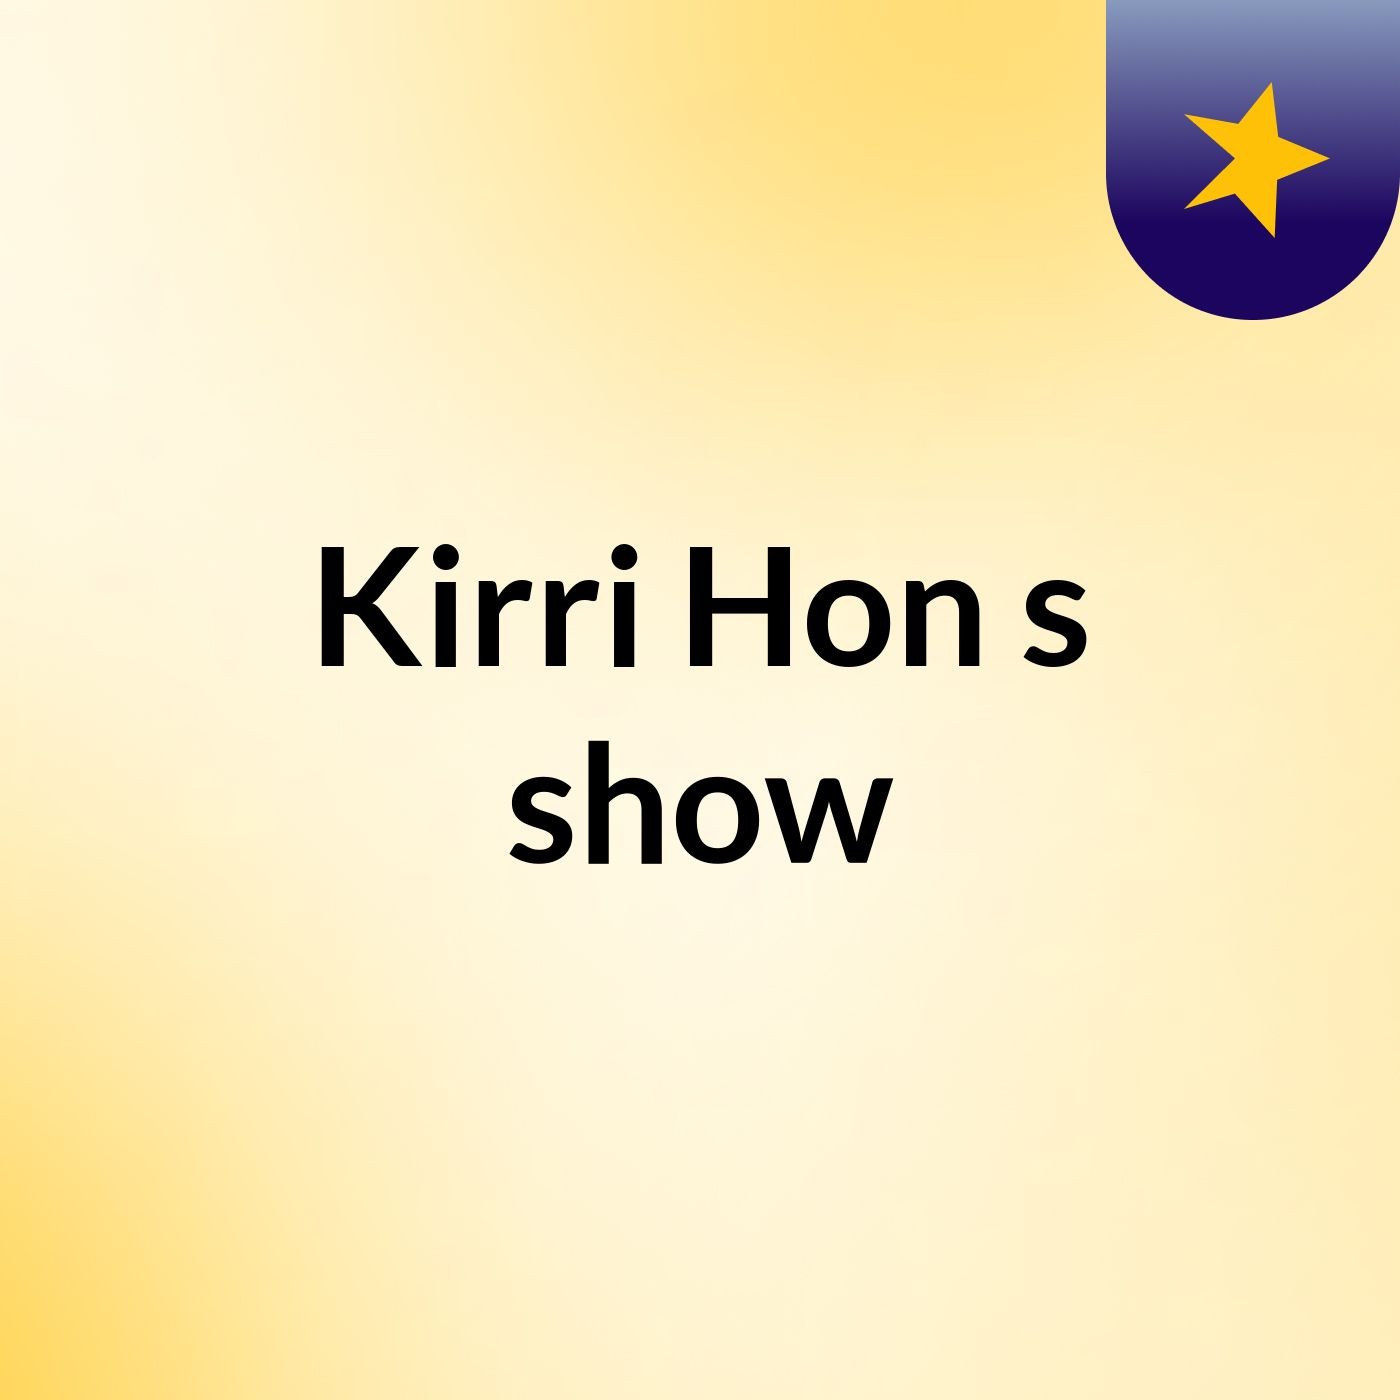 Kirri Hon's show